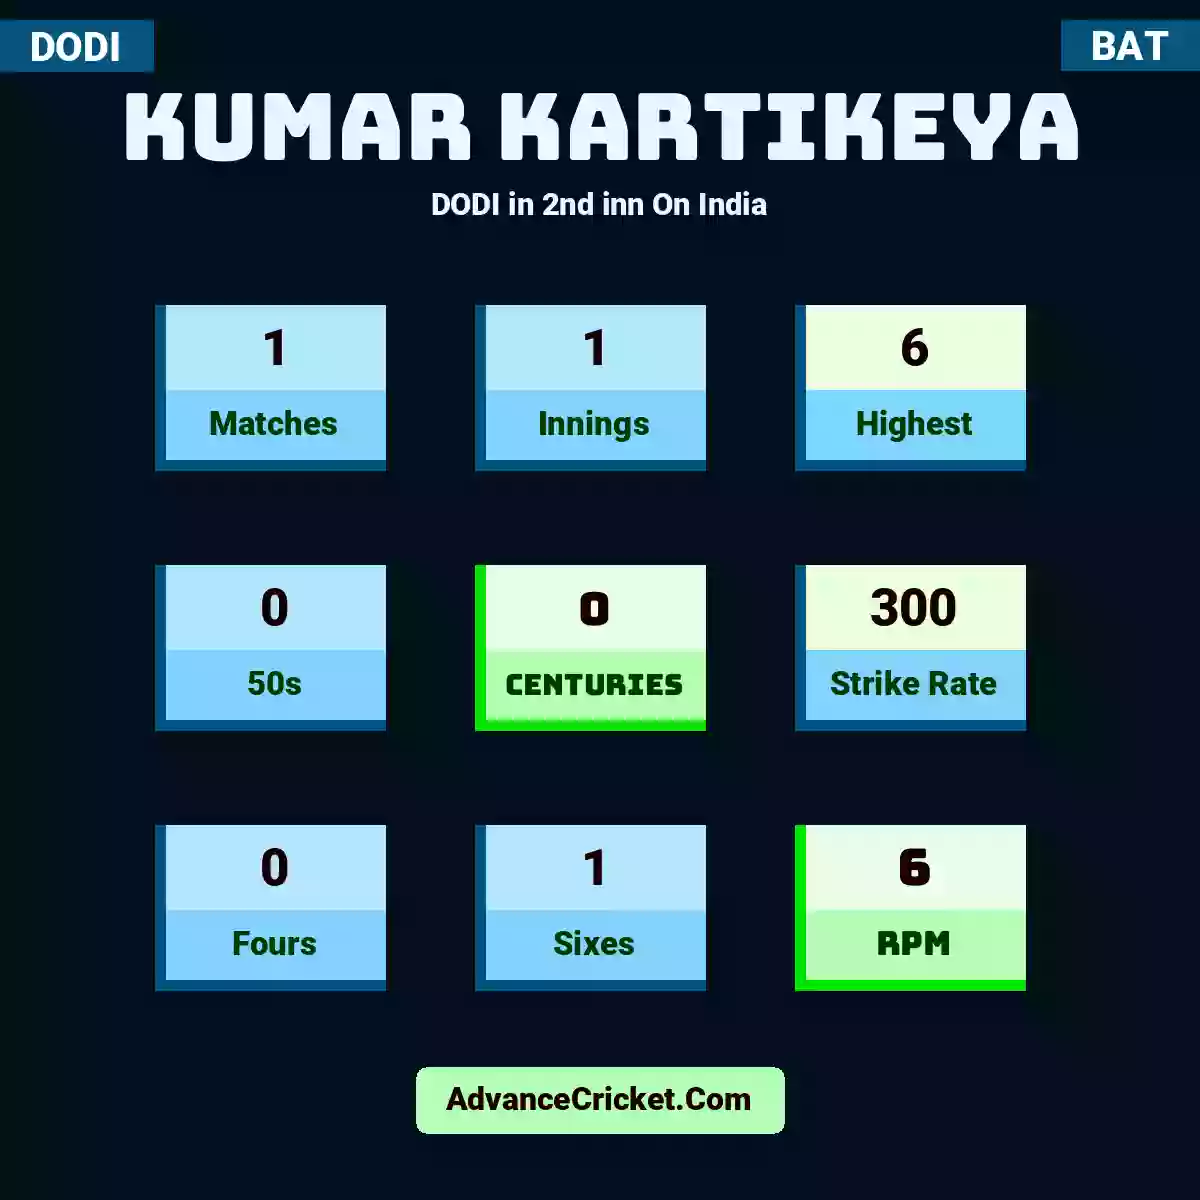 Kumar Kartikeya DODI  in 2nd inn On India, Kumar Kartikeya played 1 matches, scored 6 runs as highest, 0 half-centuries, and 0 centuries, with a strike rate of 300. K.Kartikeya hit 0 fours and 1 sixes, with an RPM of 6.